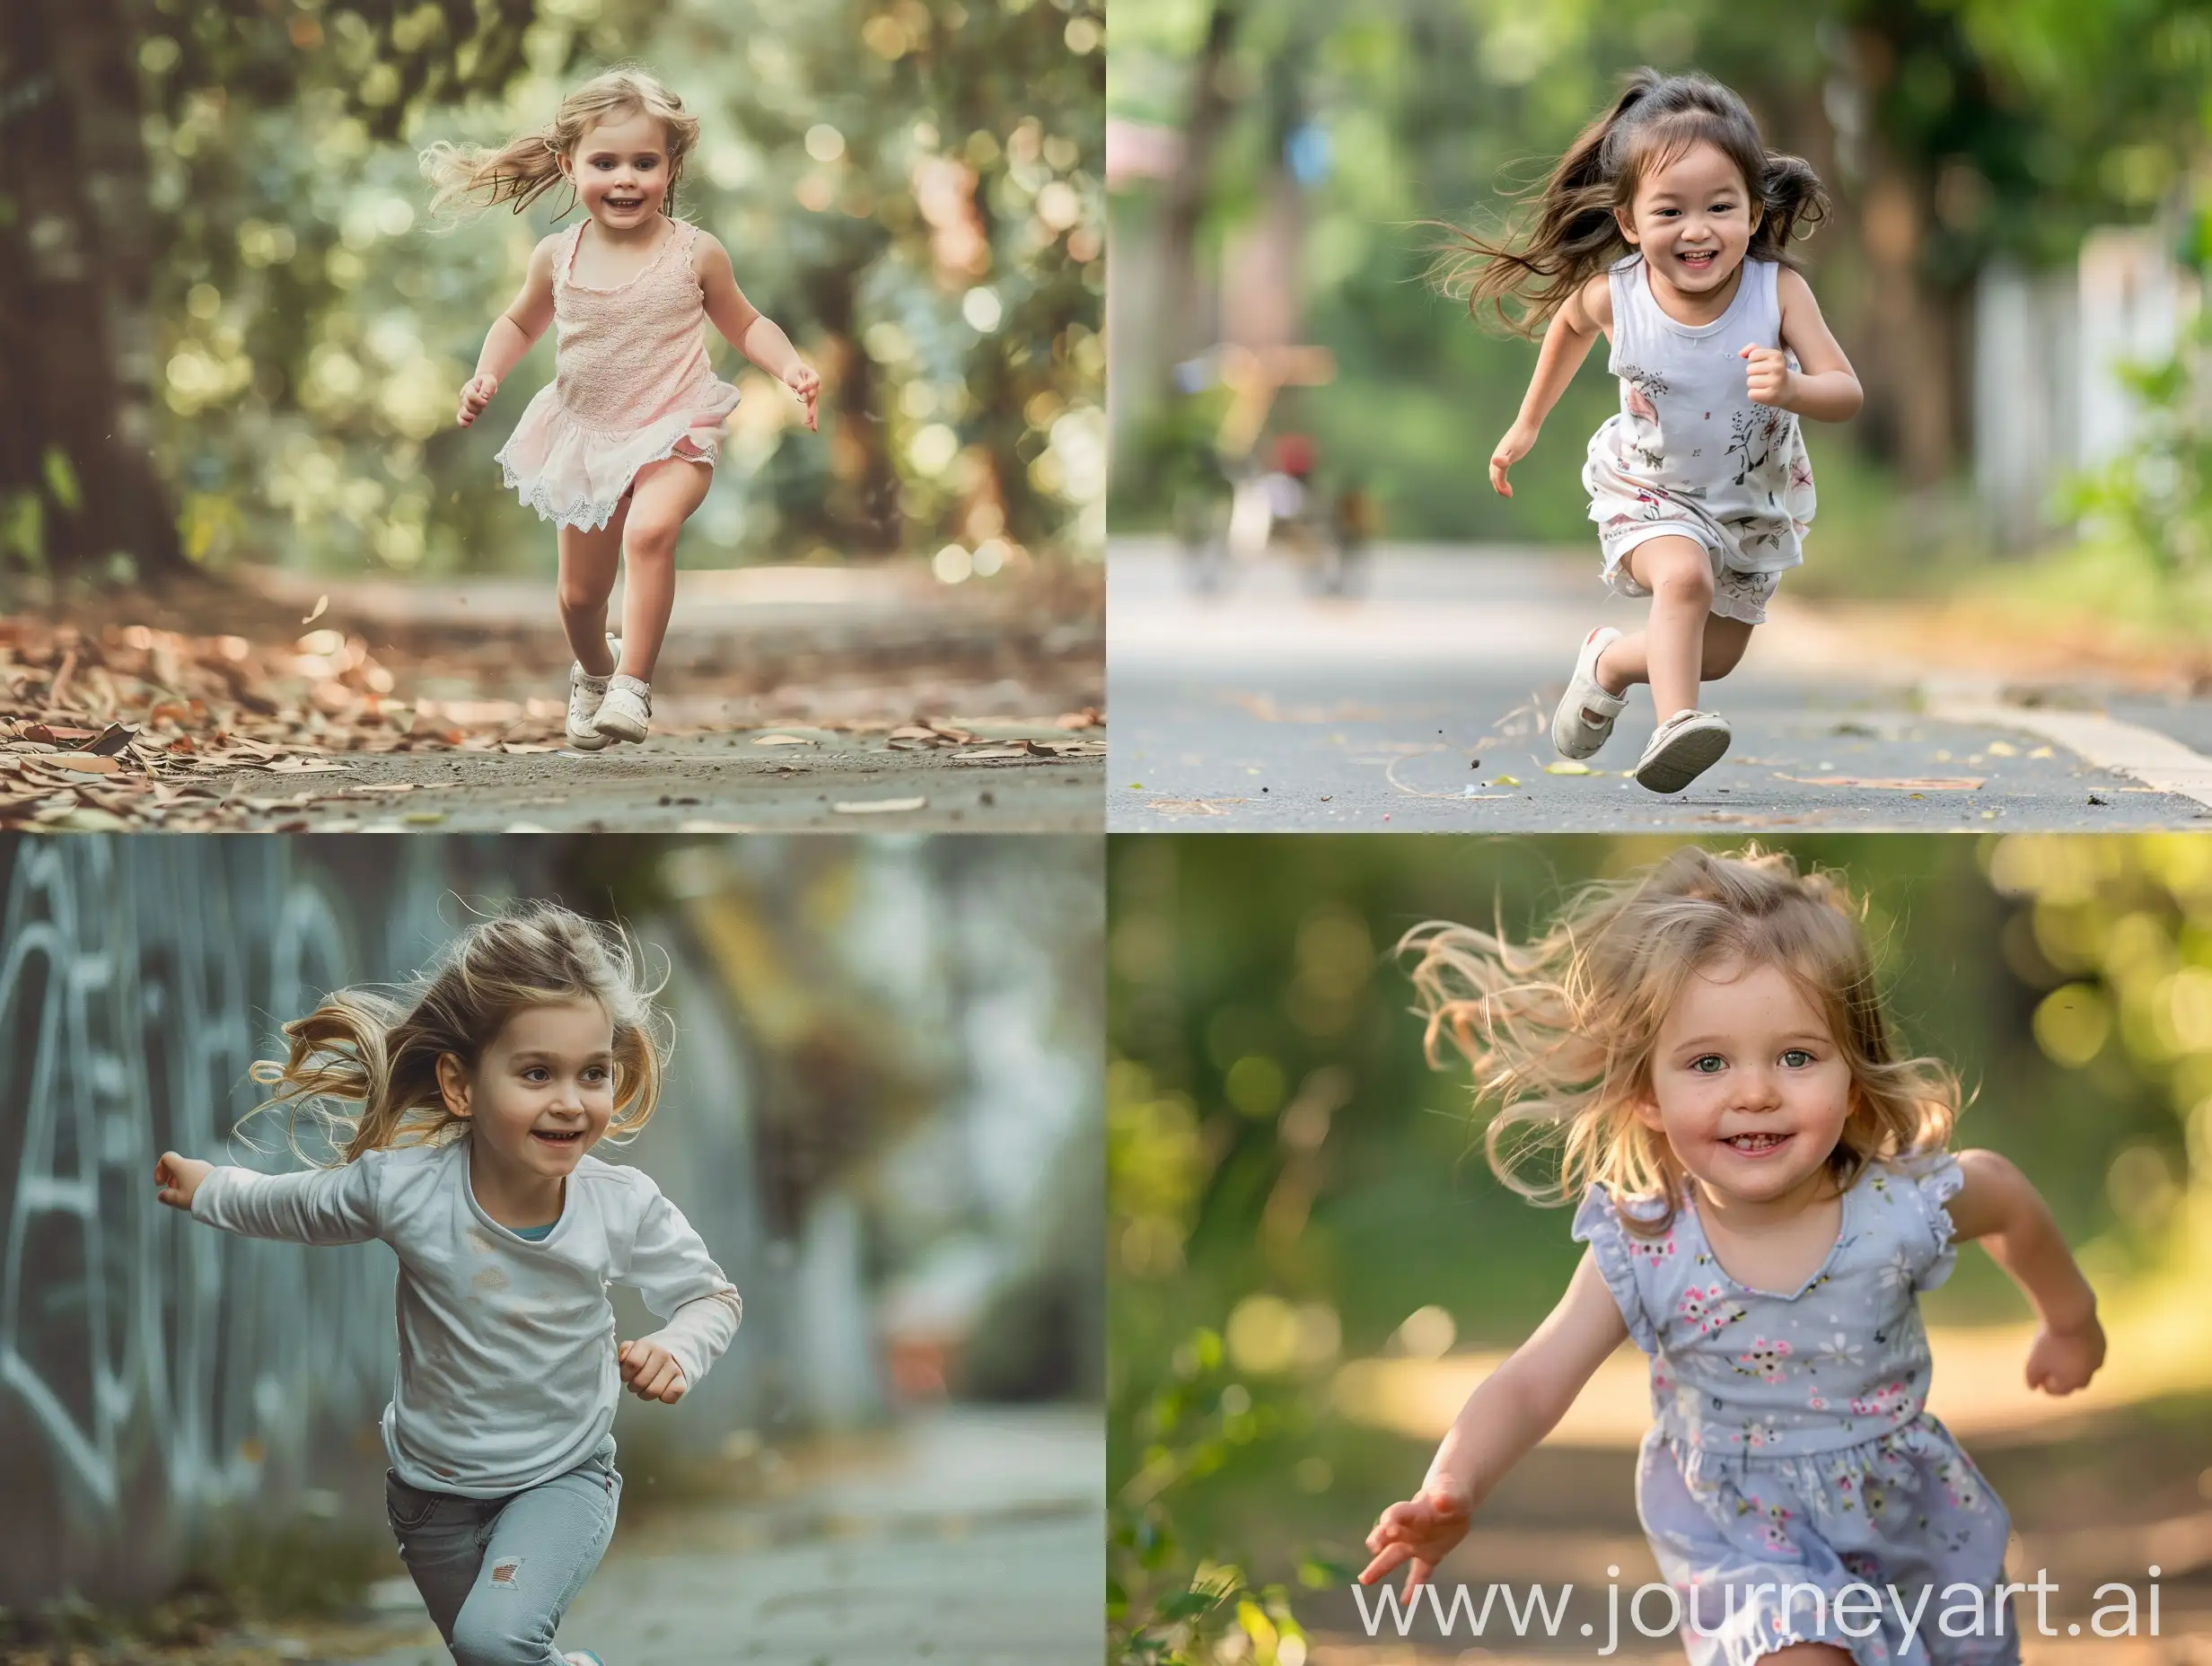 Joyful-Little-Girl-Running-Outdoors-in-Natural-Setting